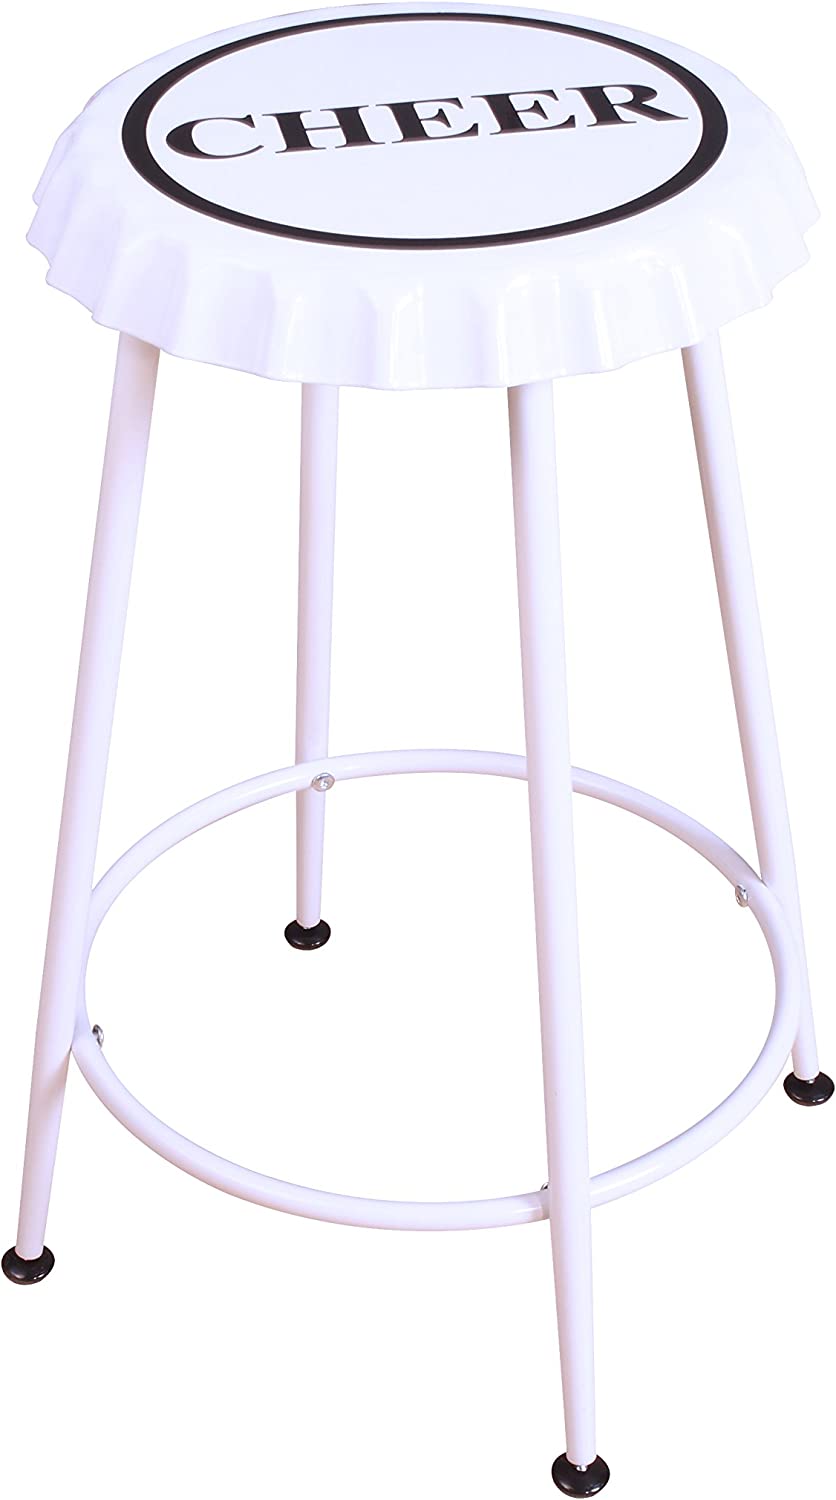 ACME Furniture Acme Mant Stool, White -Set of 2, One Size